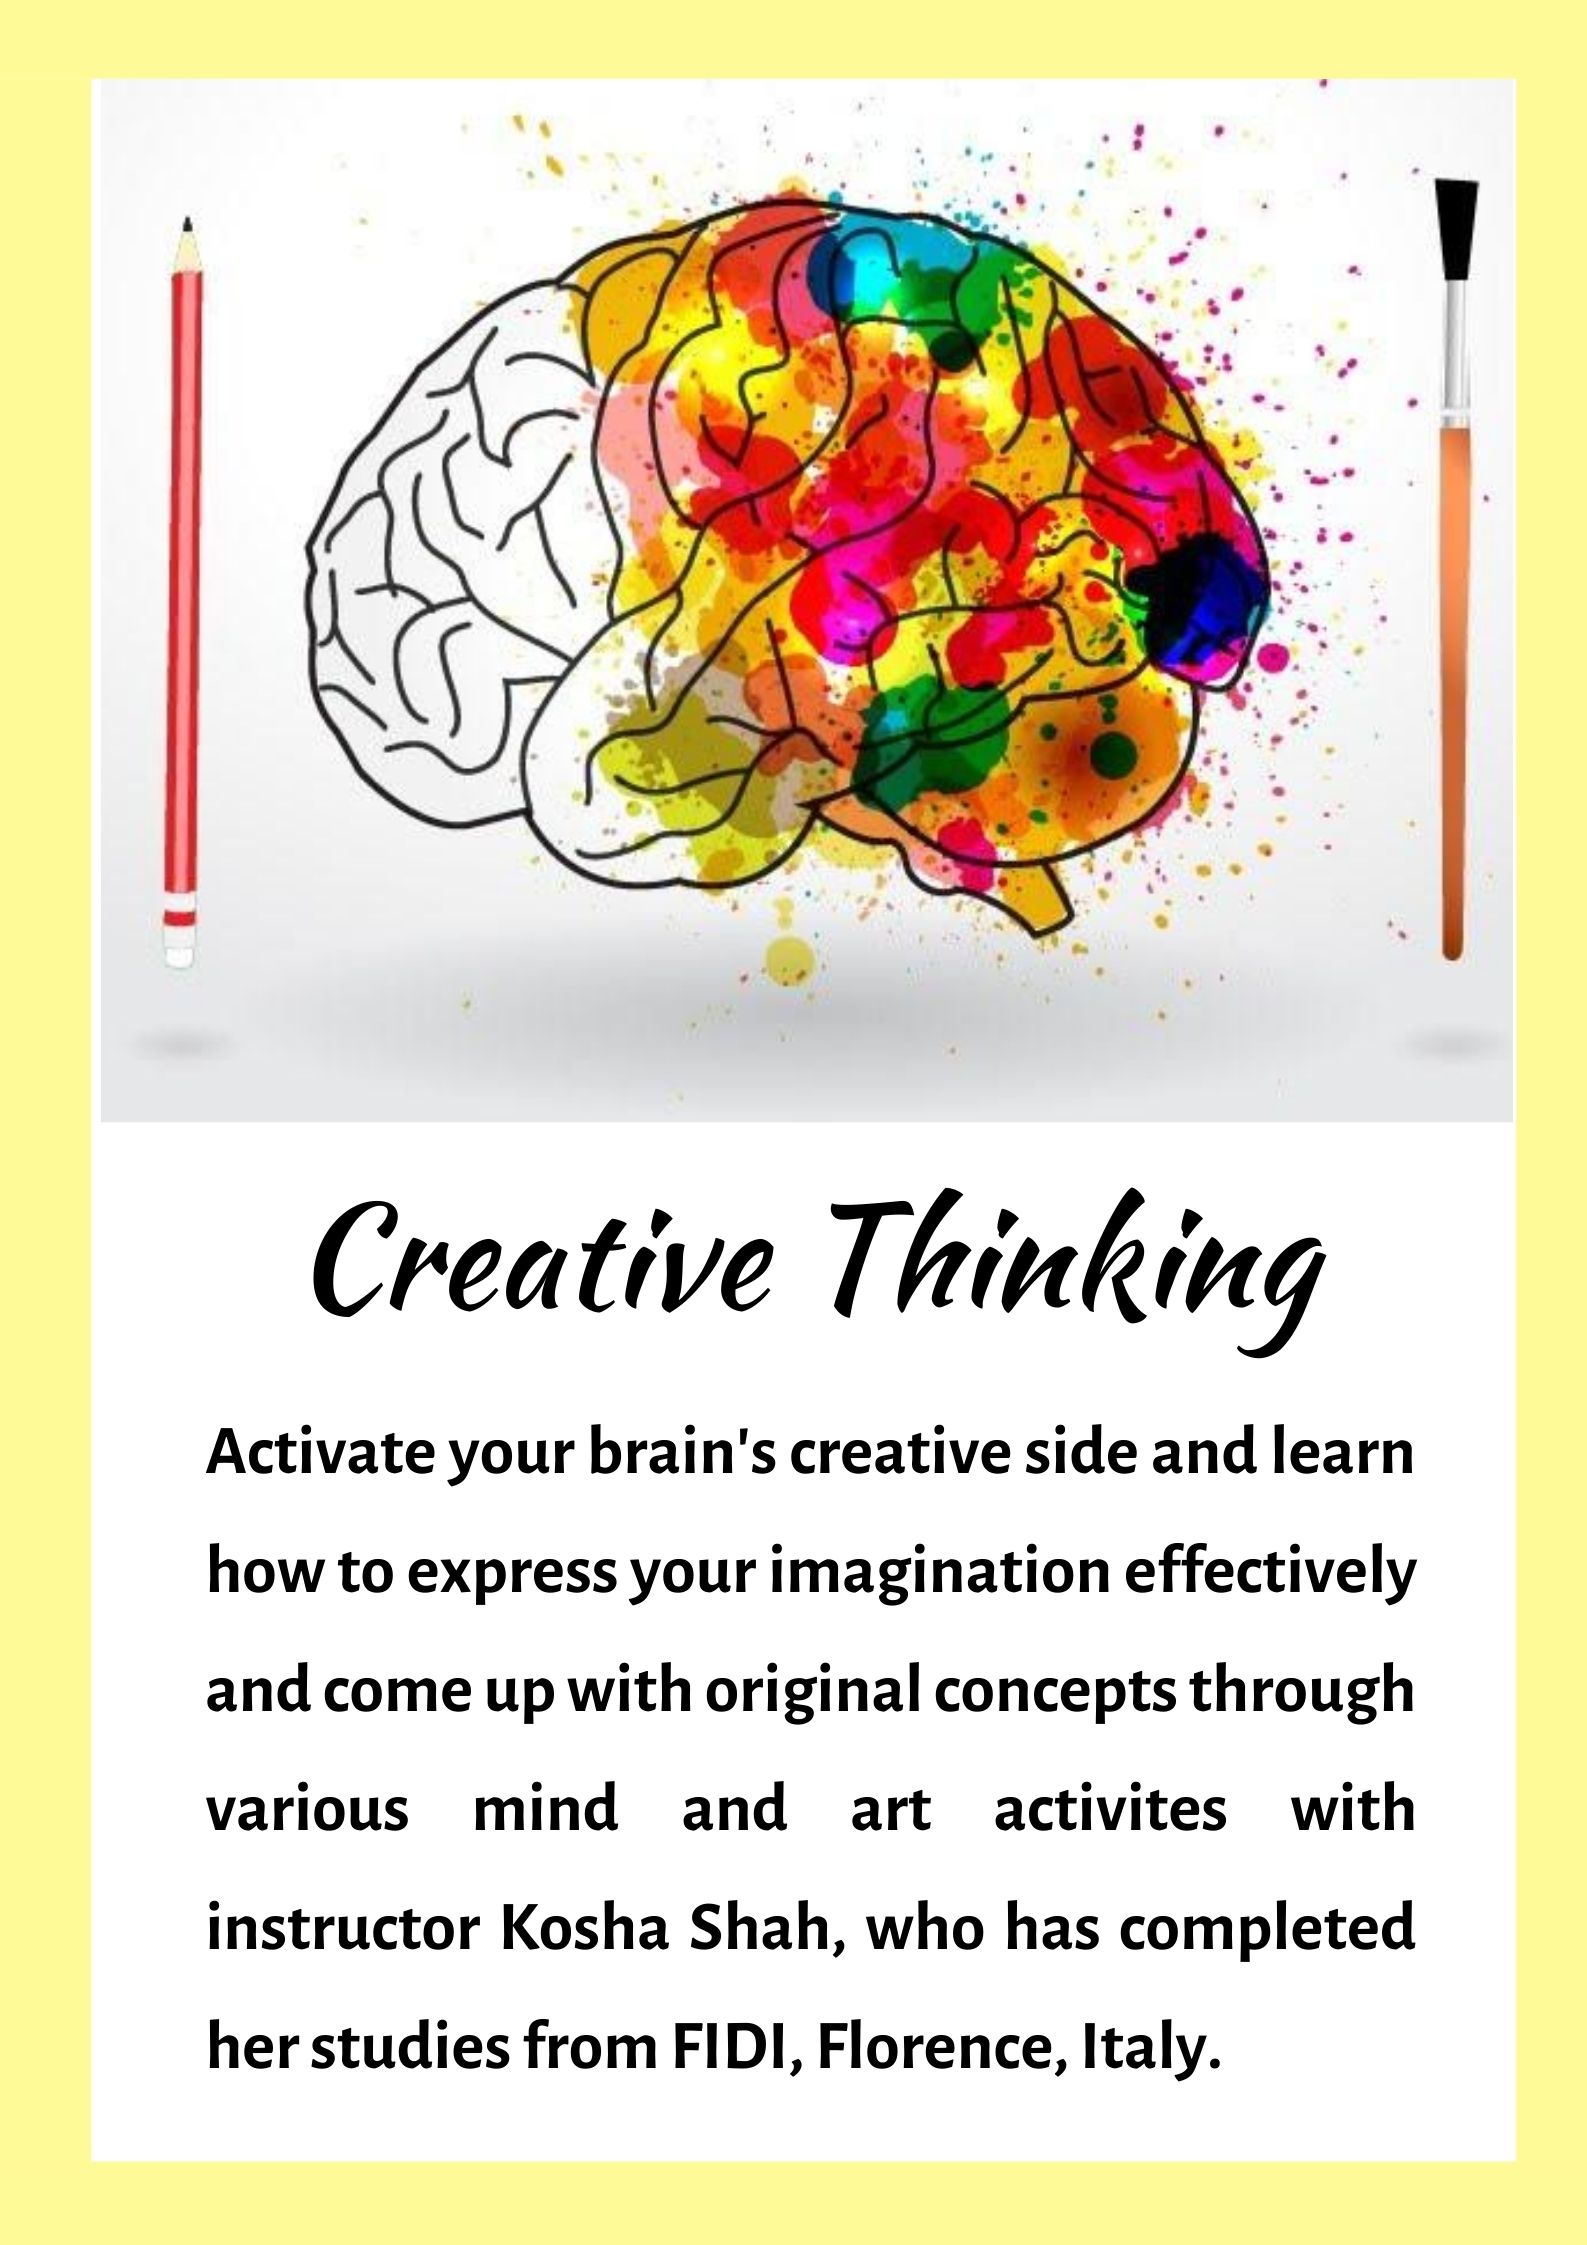 Creative Thinking - ARTISTE 360 - The Art School